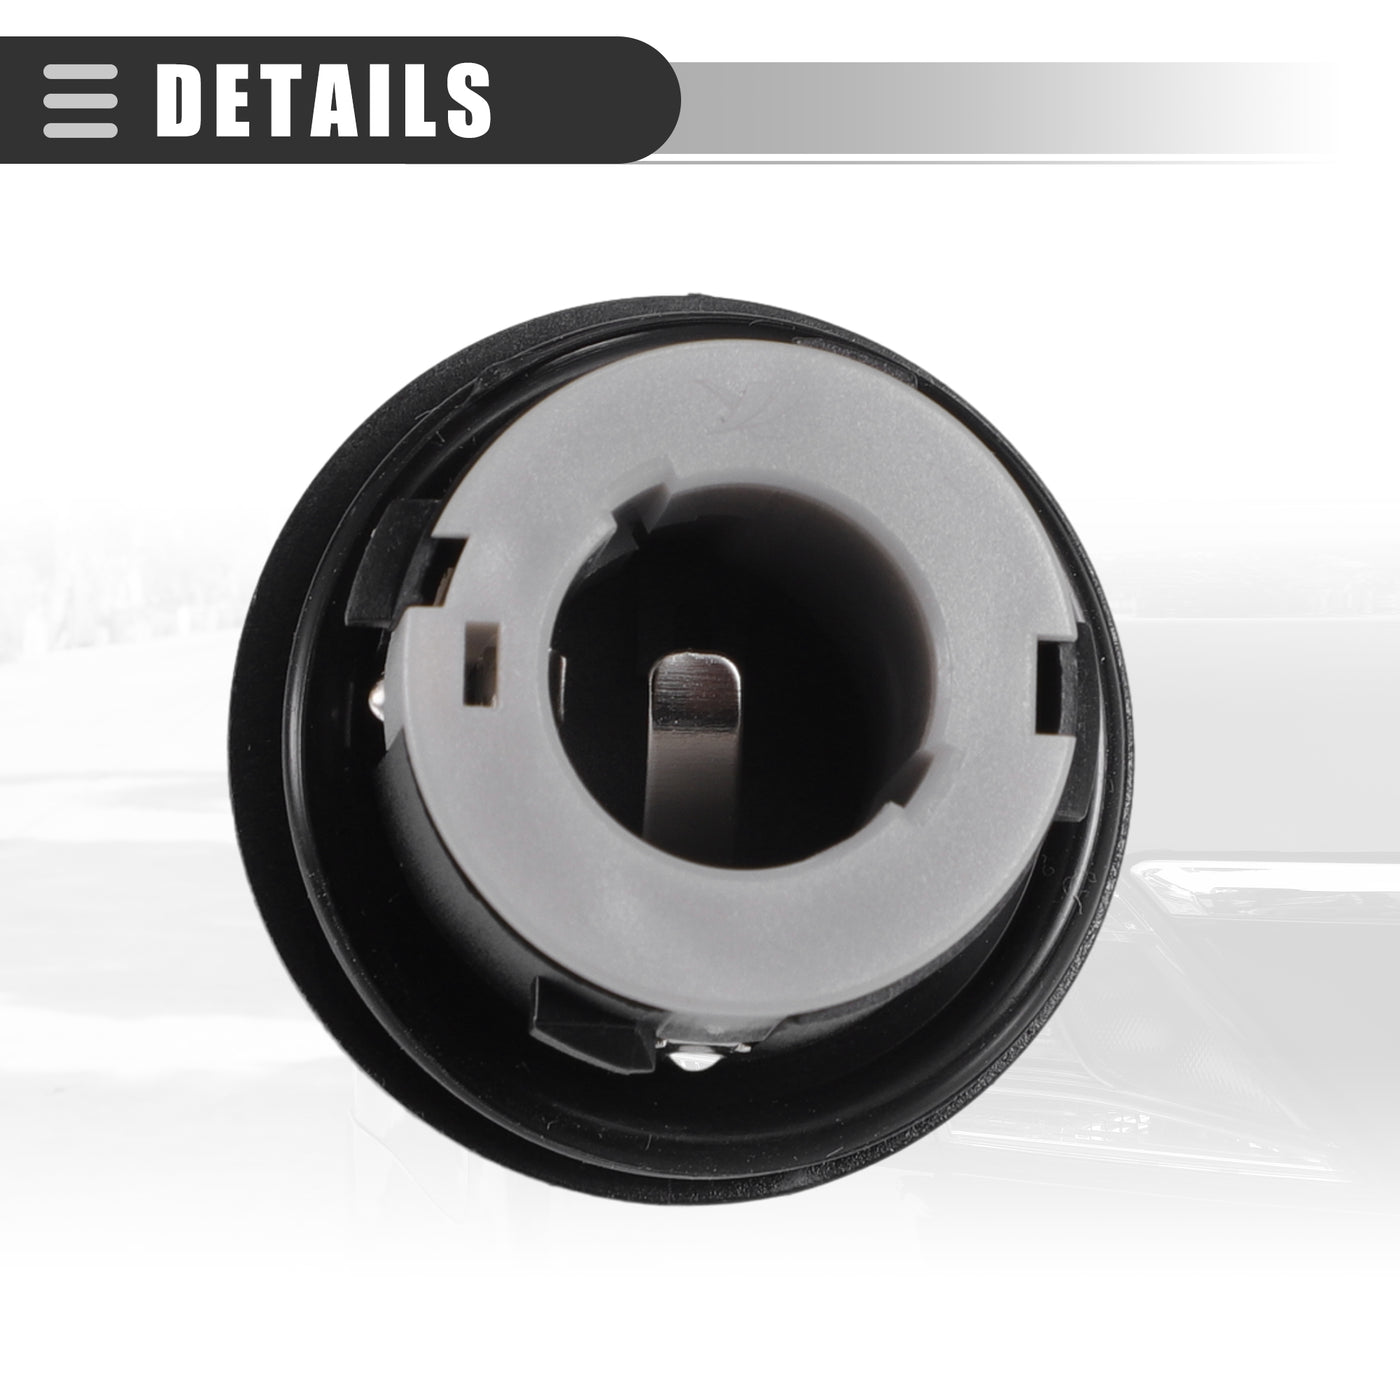 Motoforti Turn Signal Light Bulb Socket, for Hyundai Santa Fe 2010-2013, ABS, No.921613R010, Black